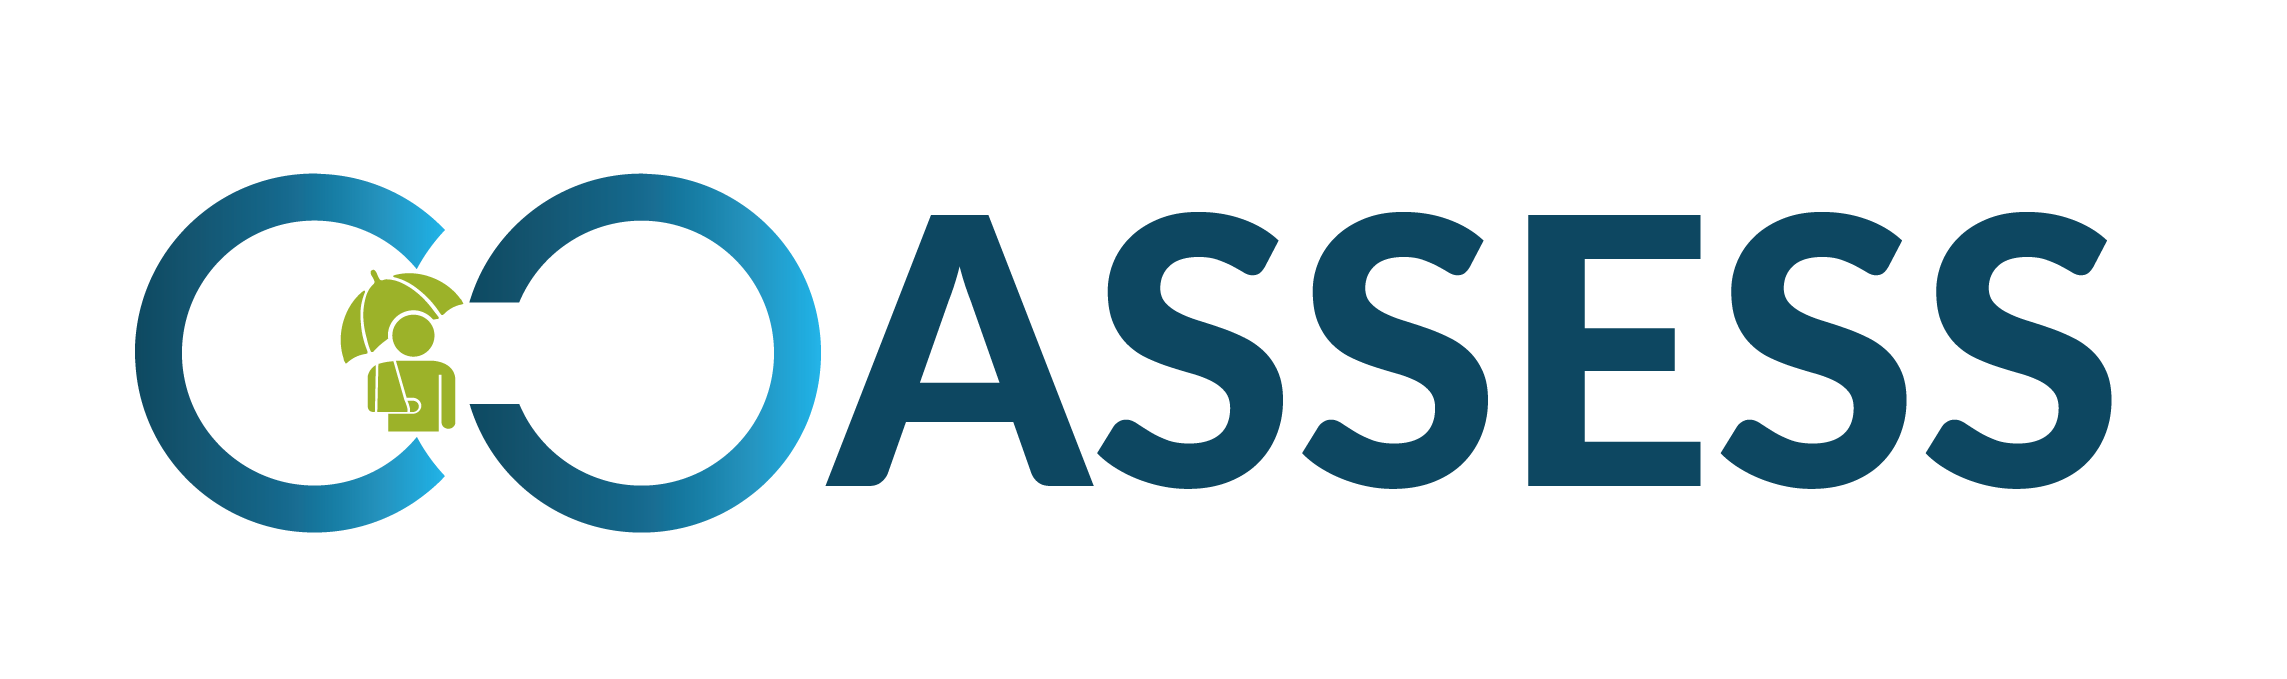 COASSESS logo